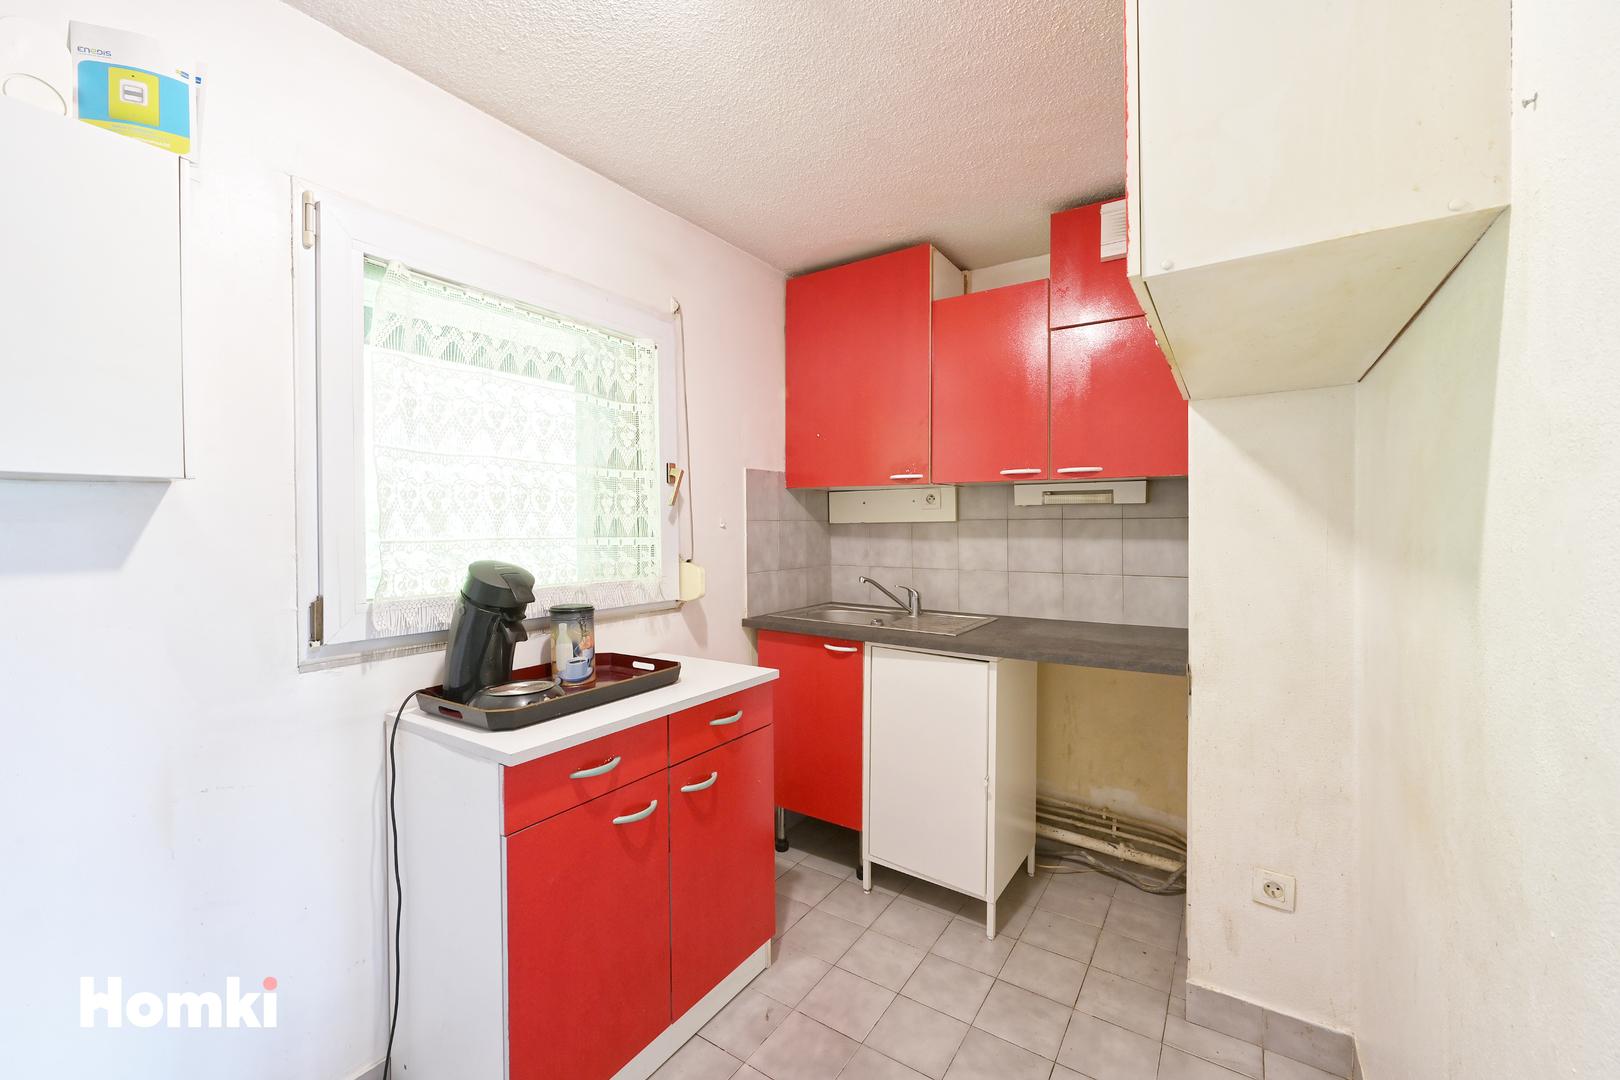 Homki - Vente Appartement  de 34.0 m² à Meylan 38240